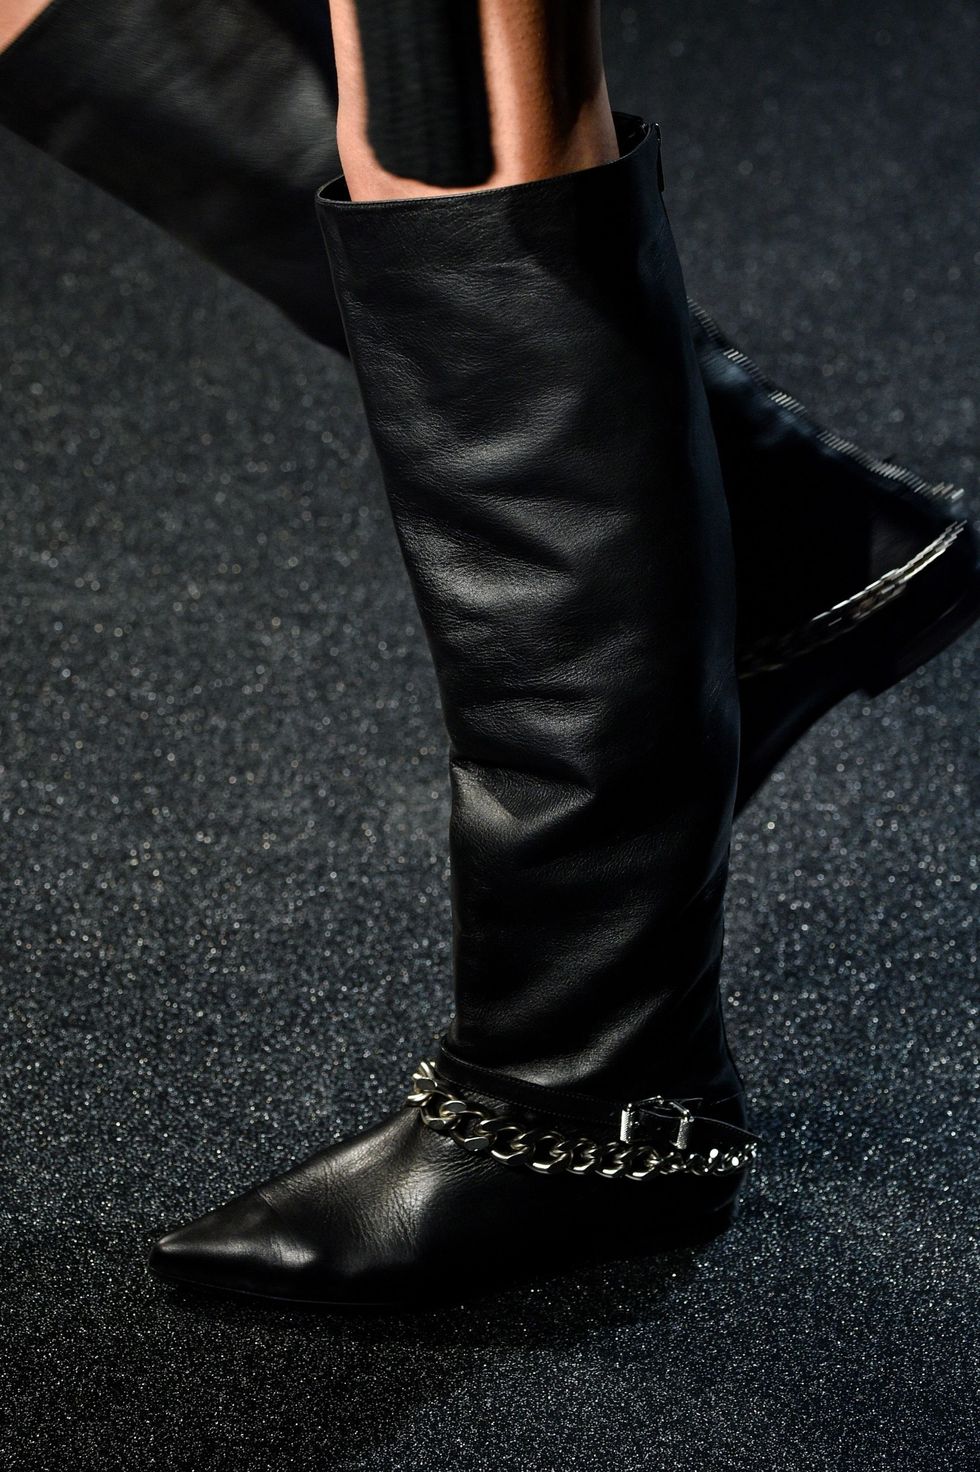 Footwear, Black, Boot, Shoe, Knee-high boot, Leg, Riding boot, Human leg, Fashion, Leather, 